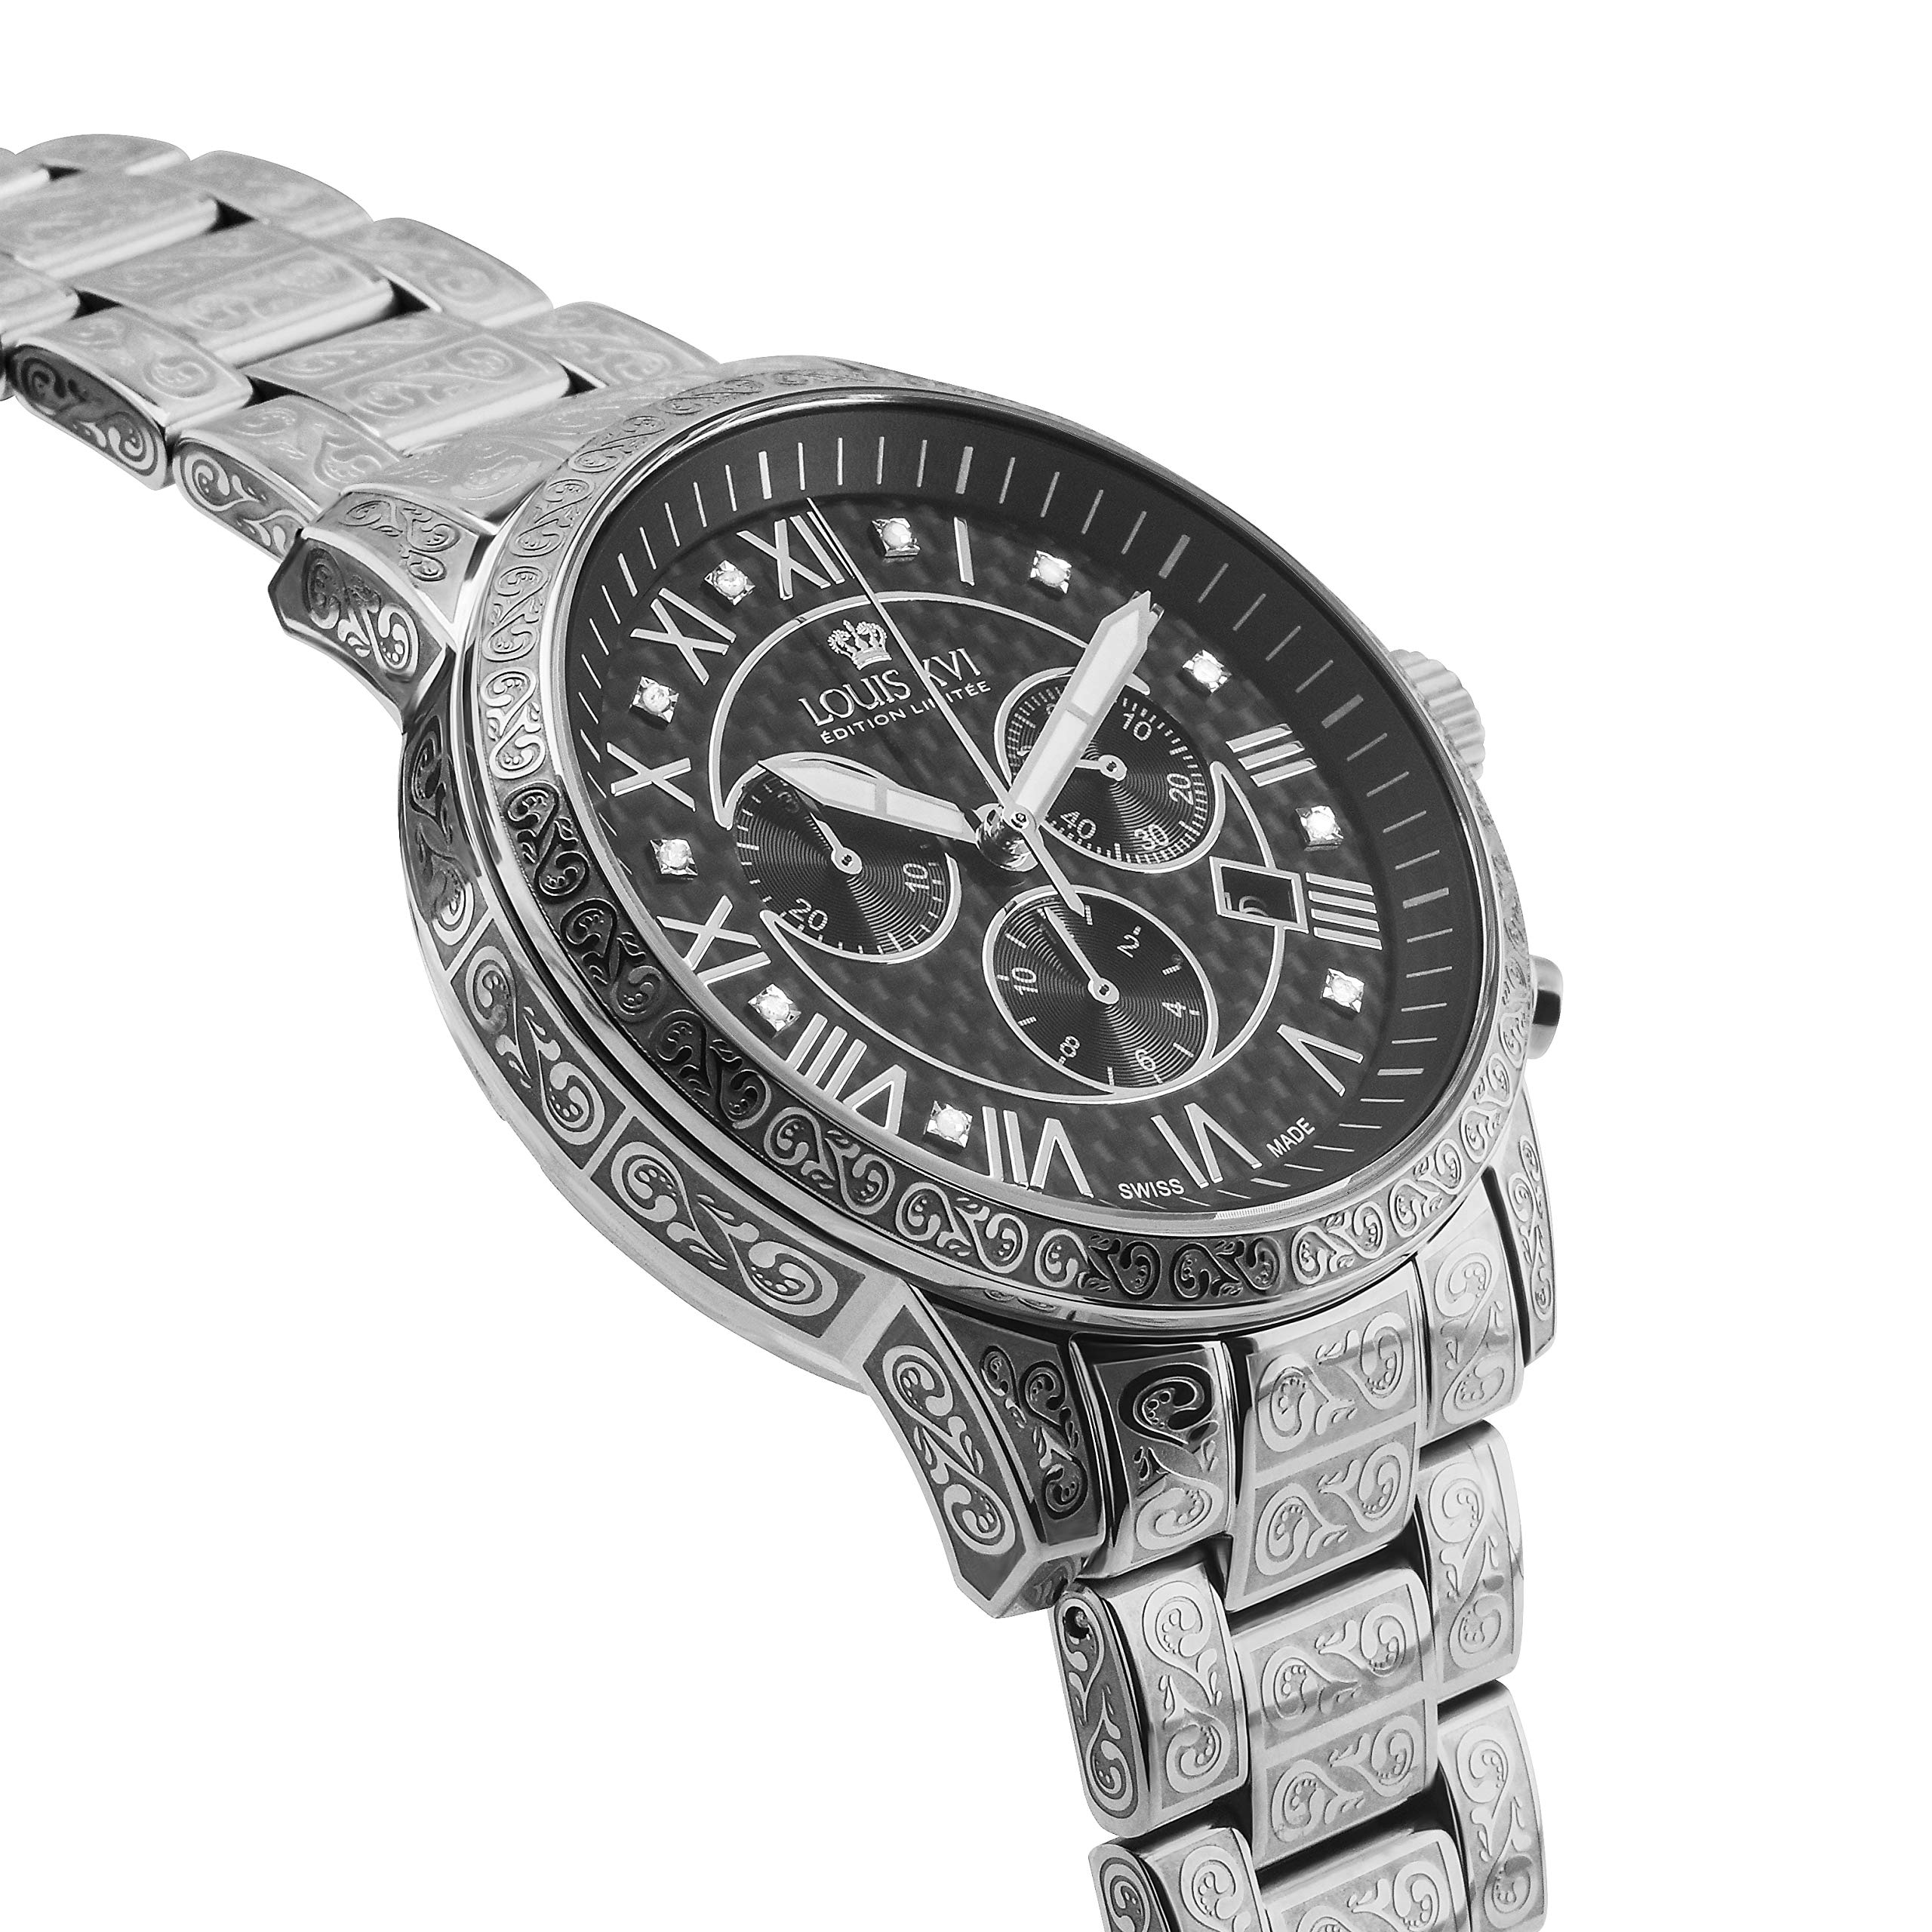 LOUIS XVI Herren-Armbanduhr Palais Royale Stahlband Silber Schwarz Karbon echte Diamanten Römische Zahlen Chronograph Analog Quarz Edelstahl 1019